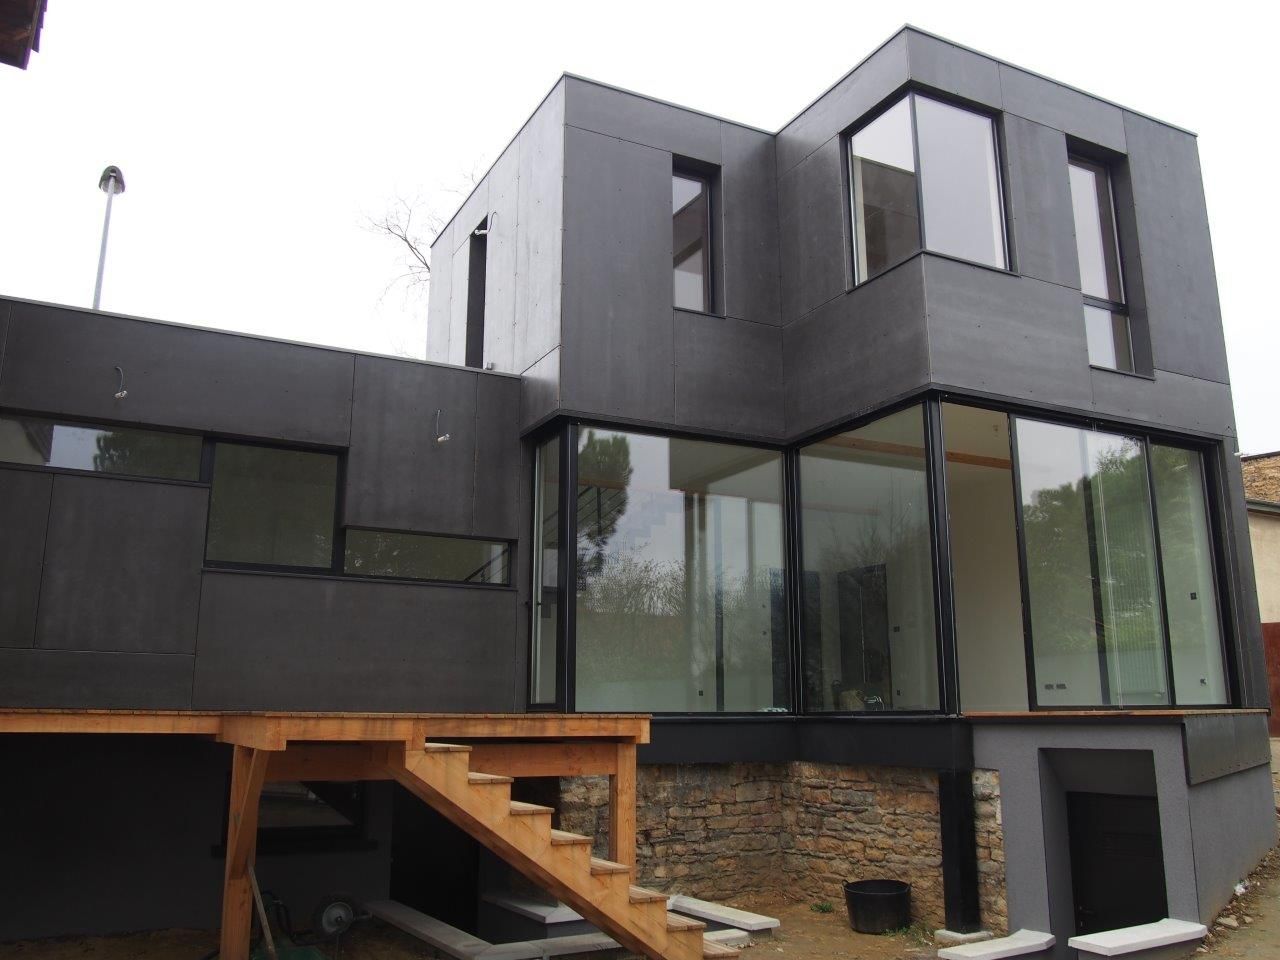 Maison moderne en ossature bois et Viroc noir